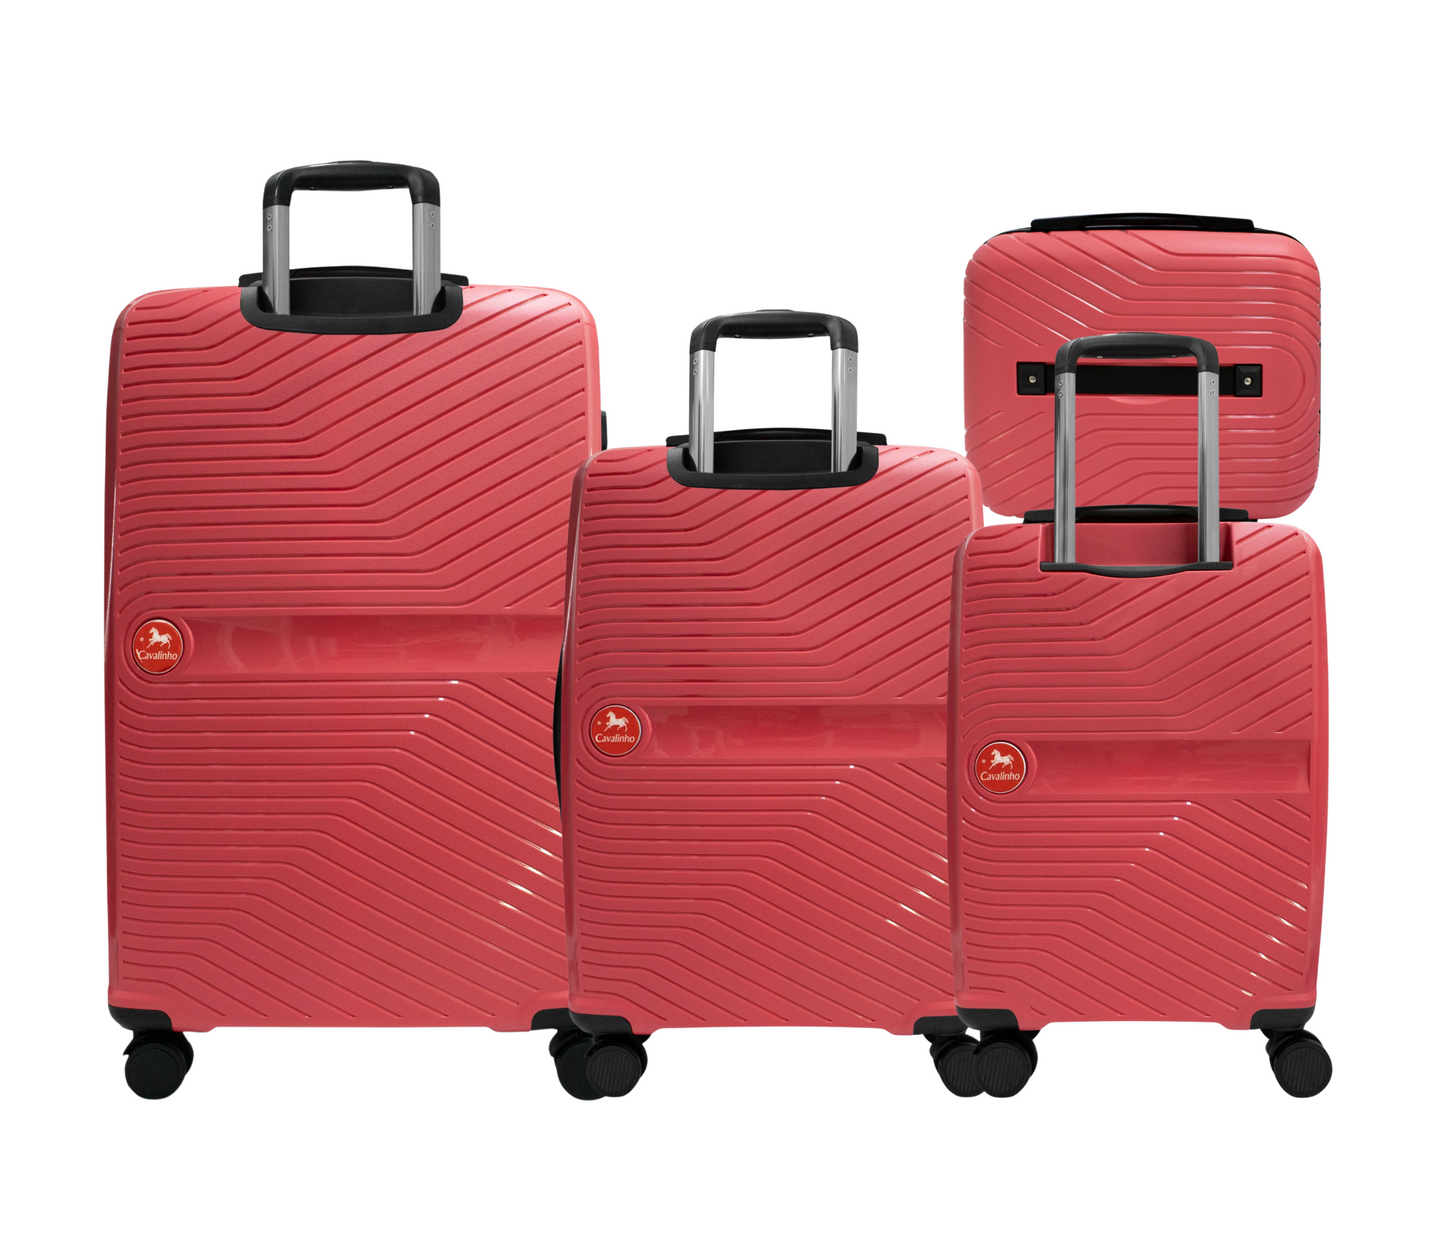 Cavalinho Canada & USA 4 Piece Set of Colorful Hardside Luggage (15", 19", 24", 28") - Coral - 68020004.27.S4_3